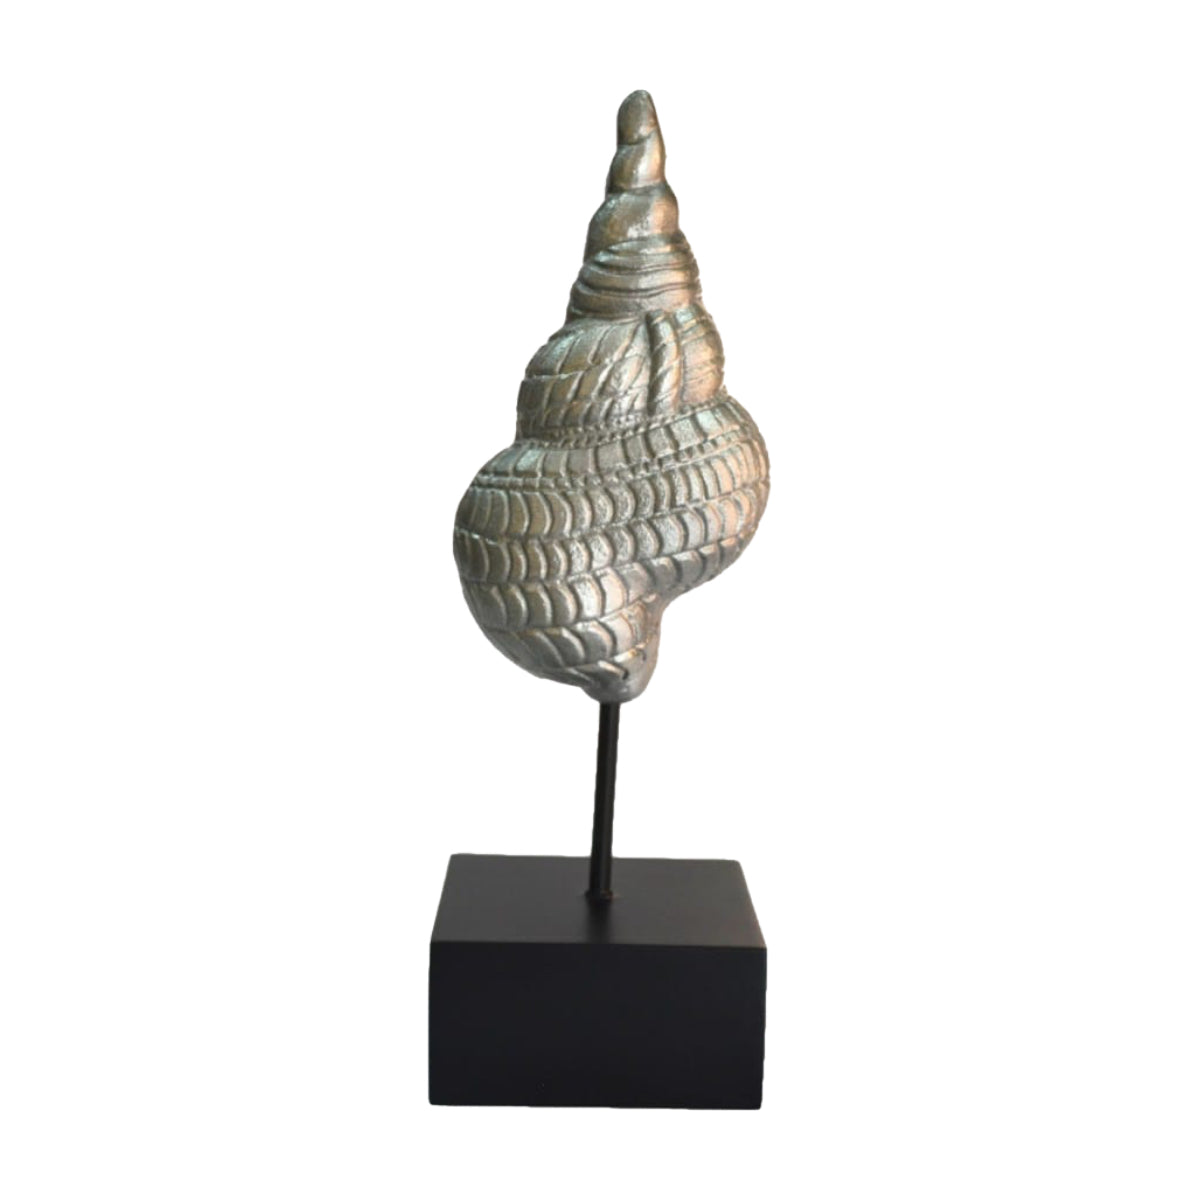 Deco Sculpture Sea Snail on aluminum stand, 100x305mm, Silver/Black